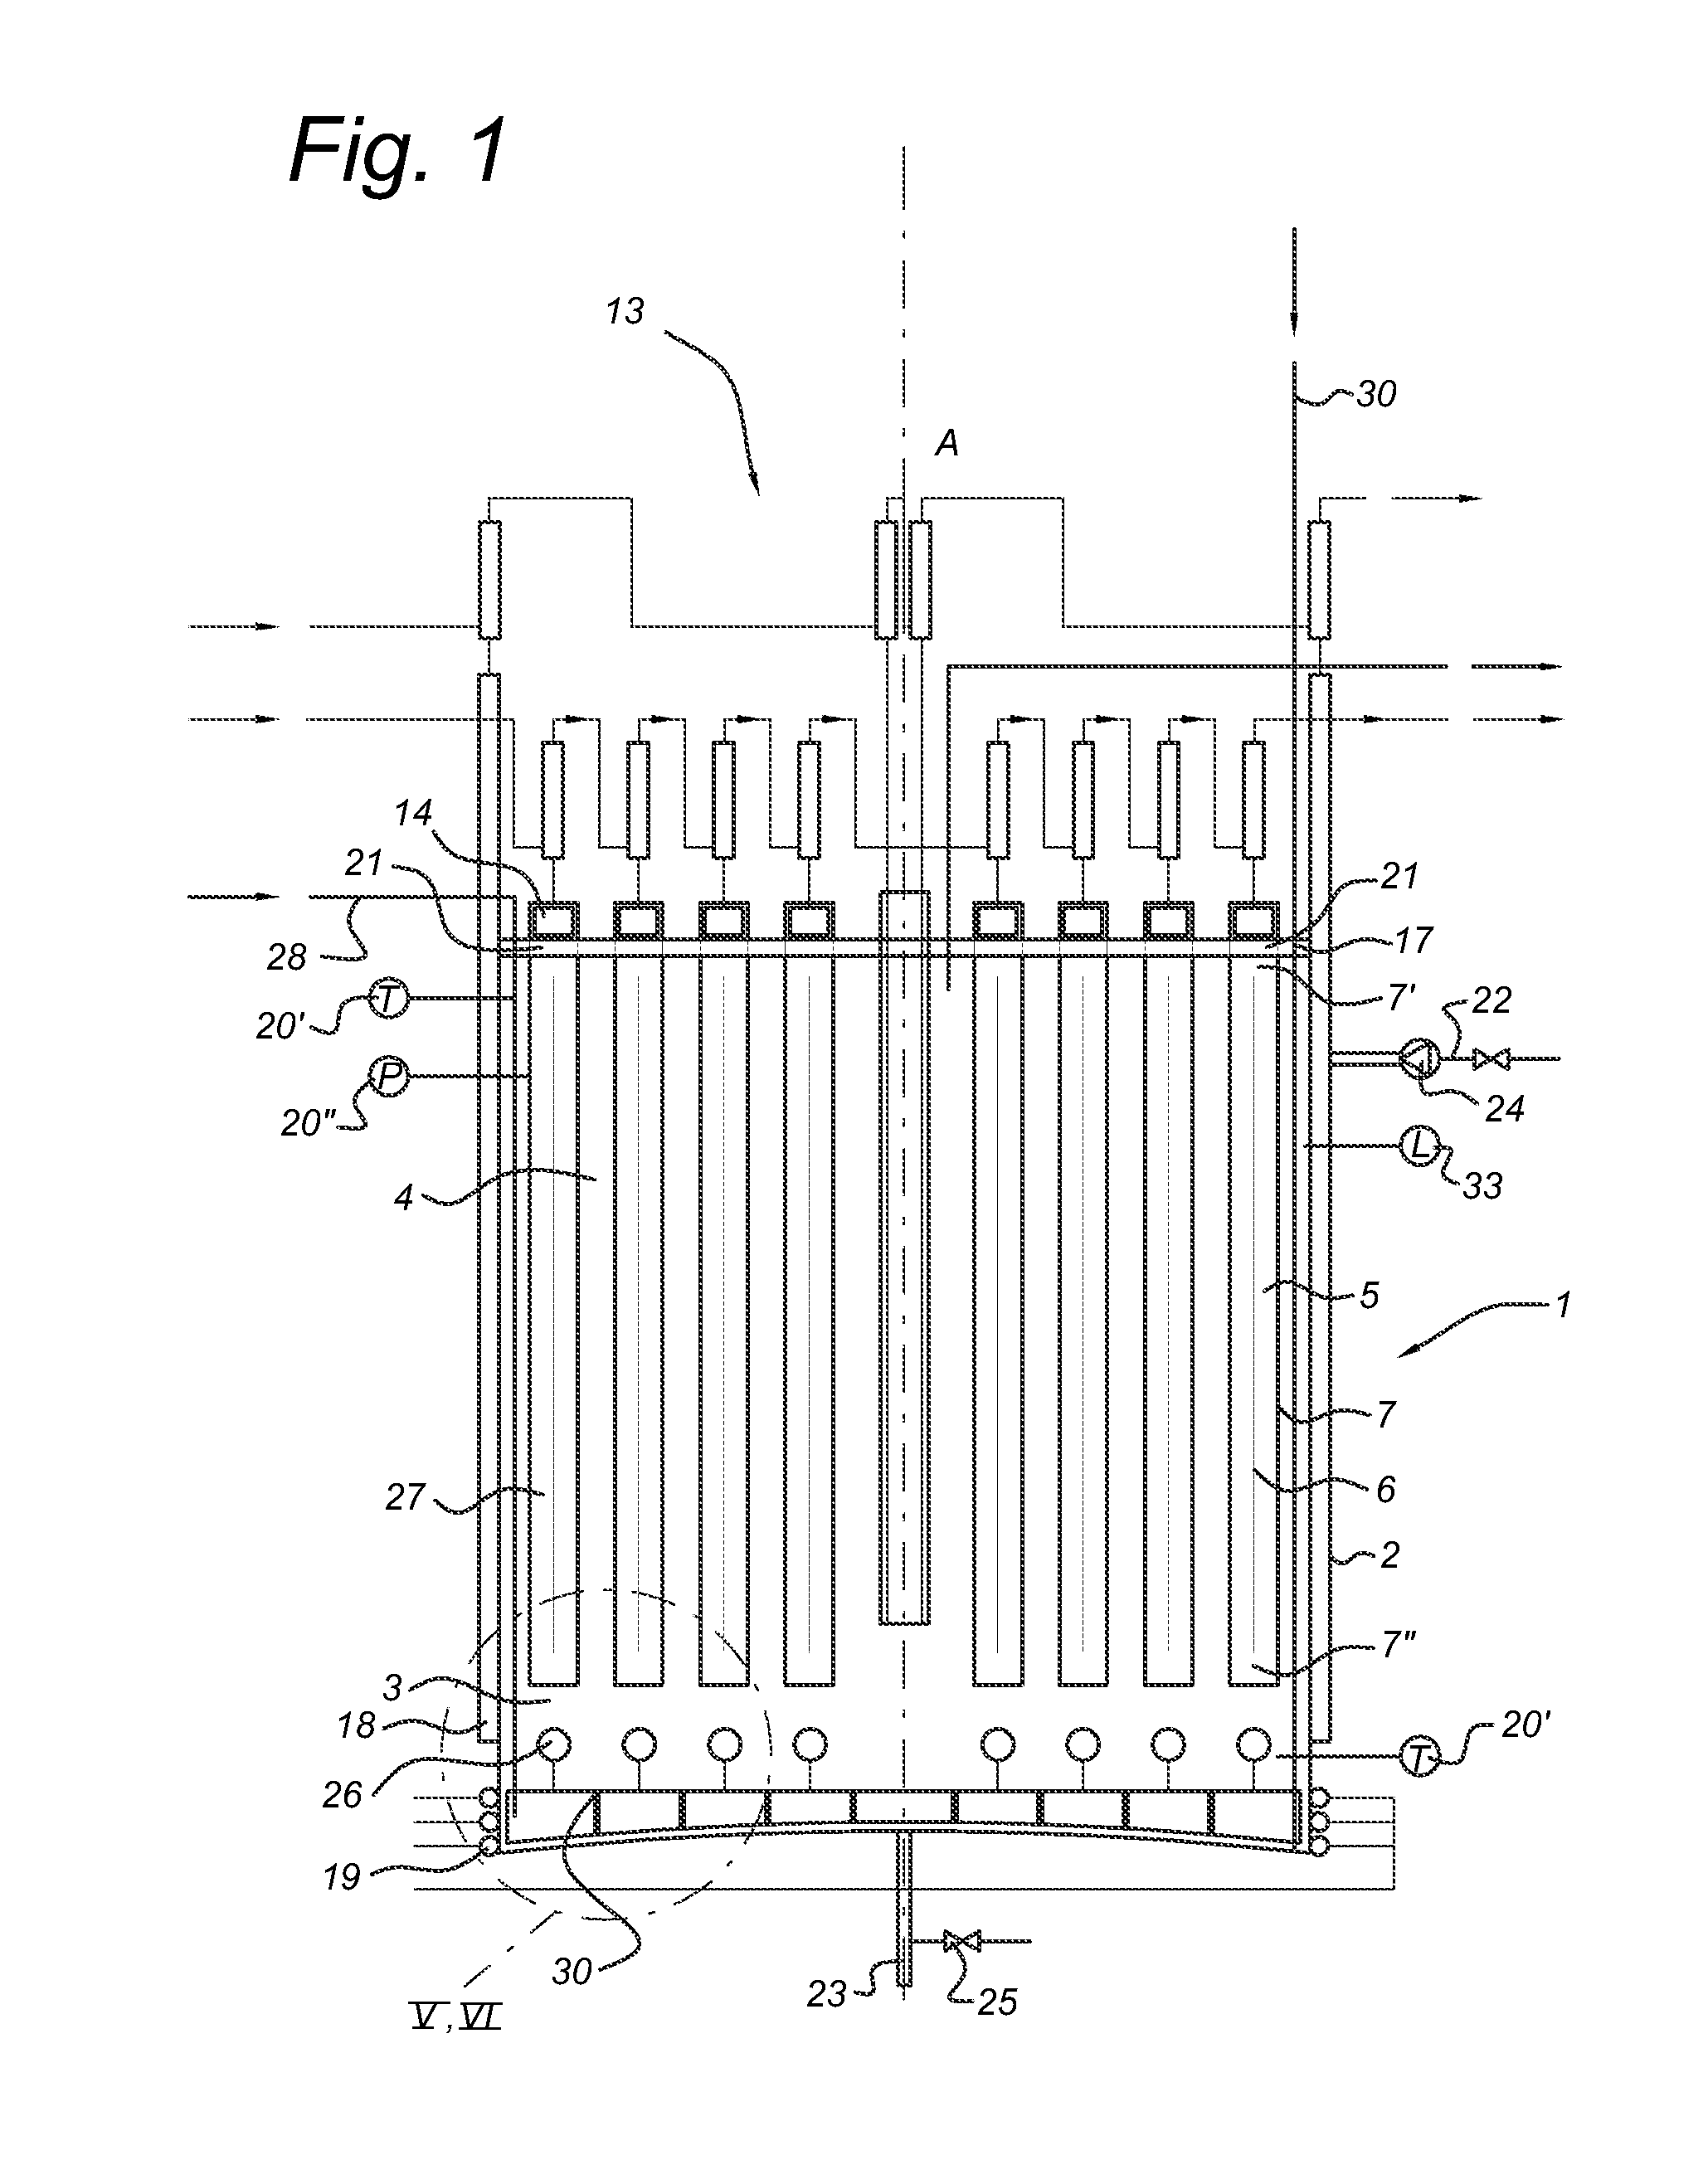 Arrangement of a photobioreactor or a microbiological reactor